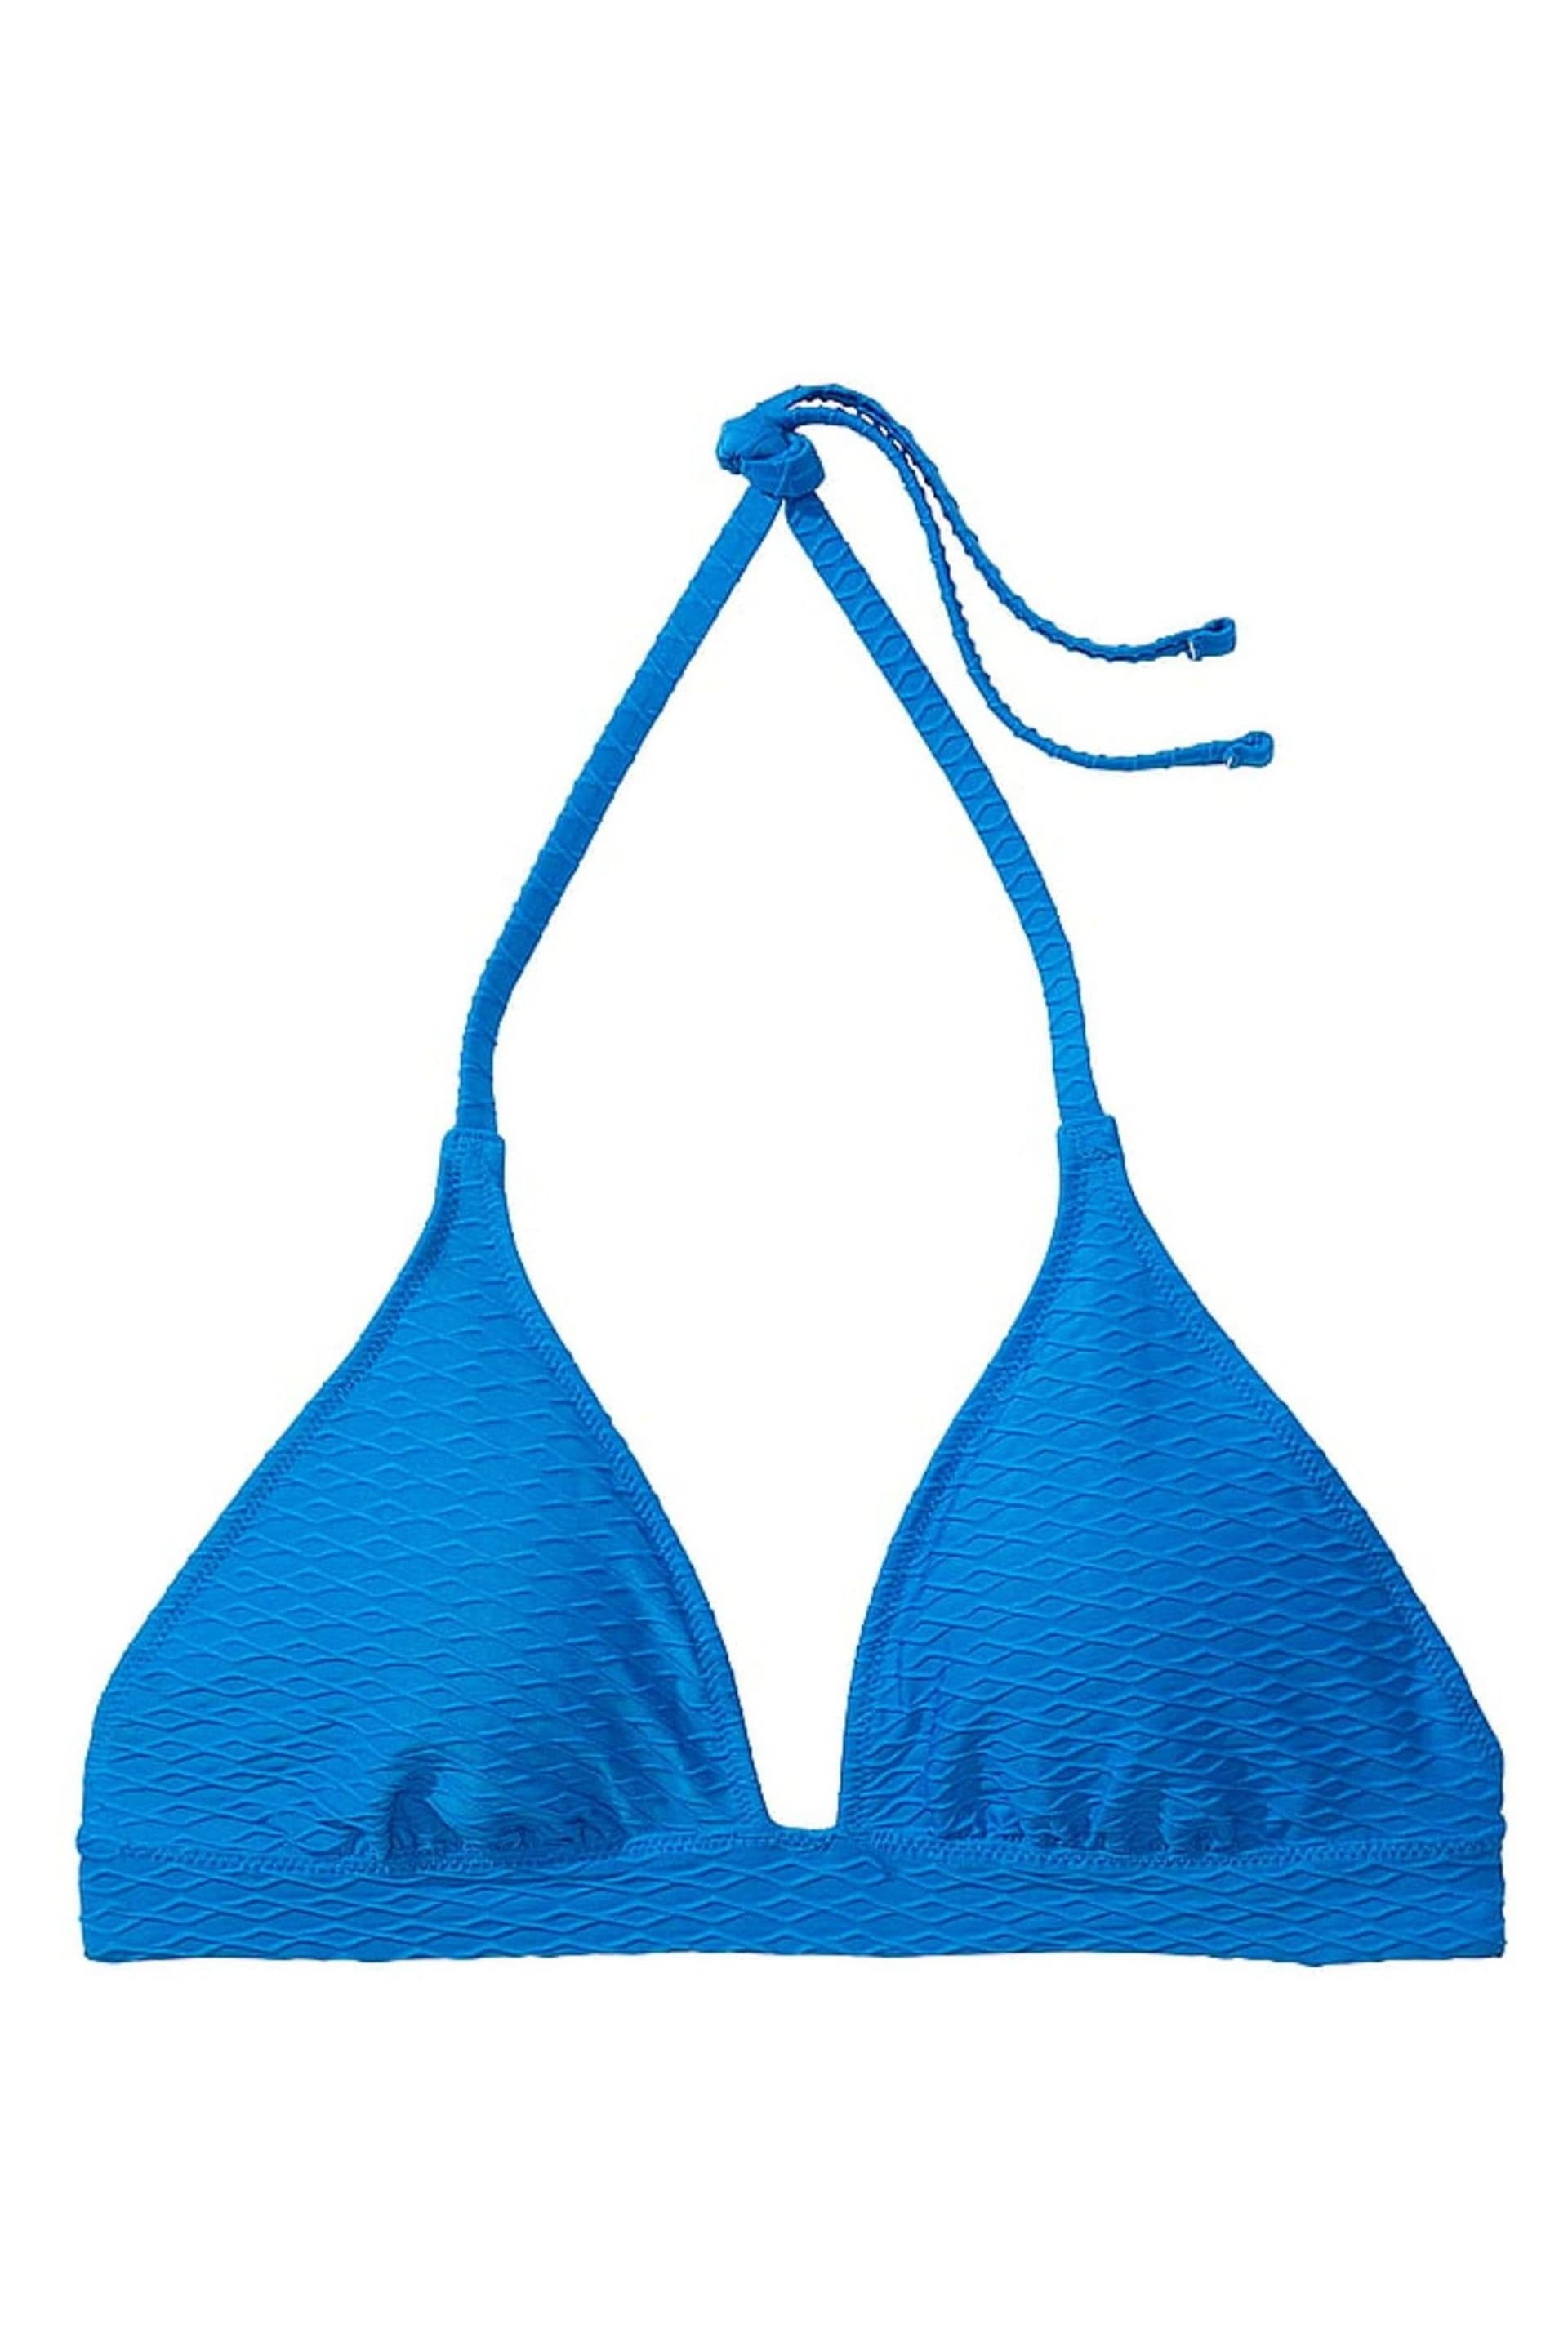 Victoria's Secret Shocking Blue Fishnet Halter Swim Bikini Top - Image 3 of 3